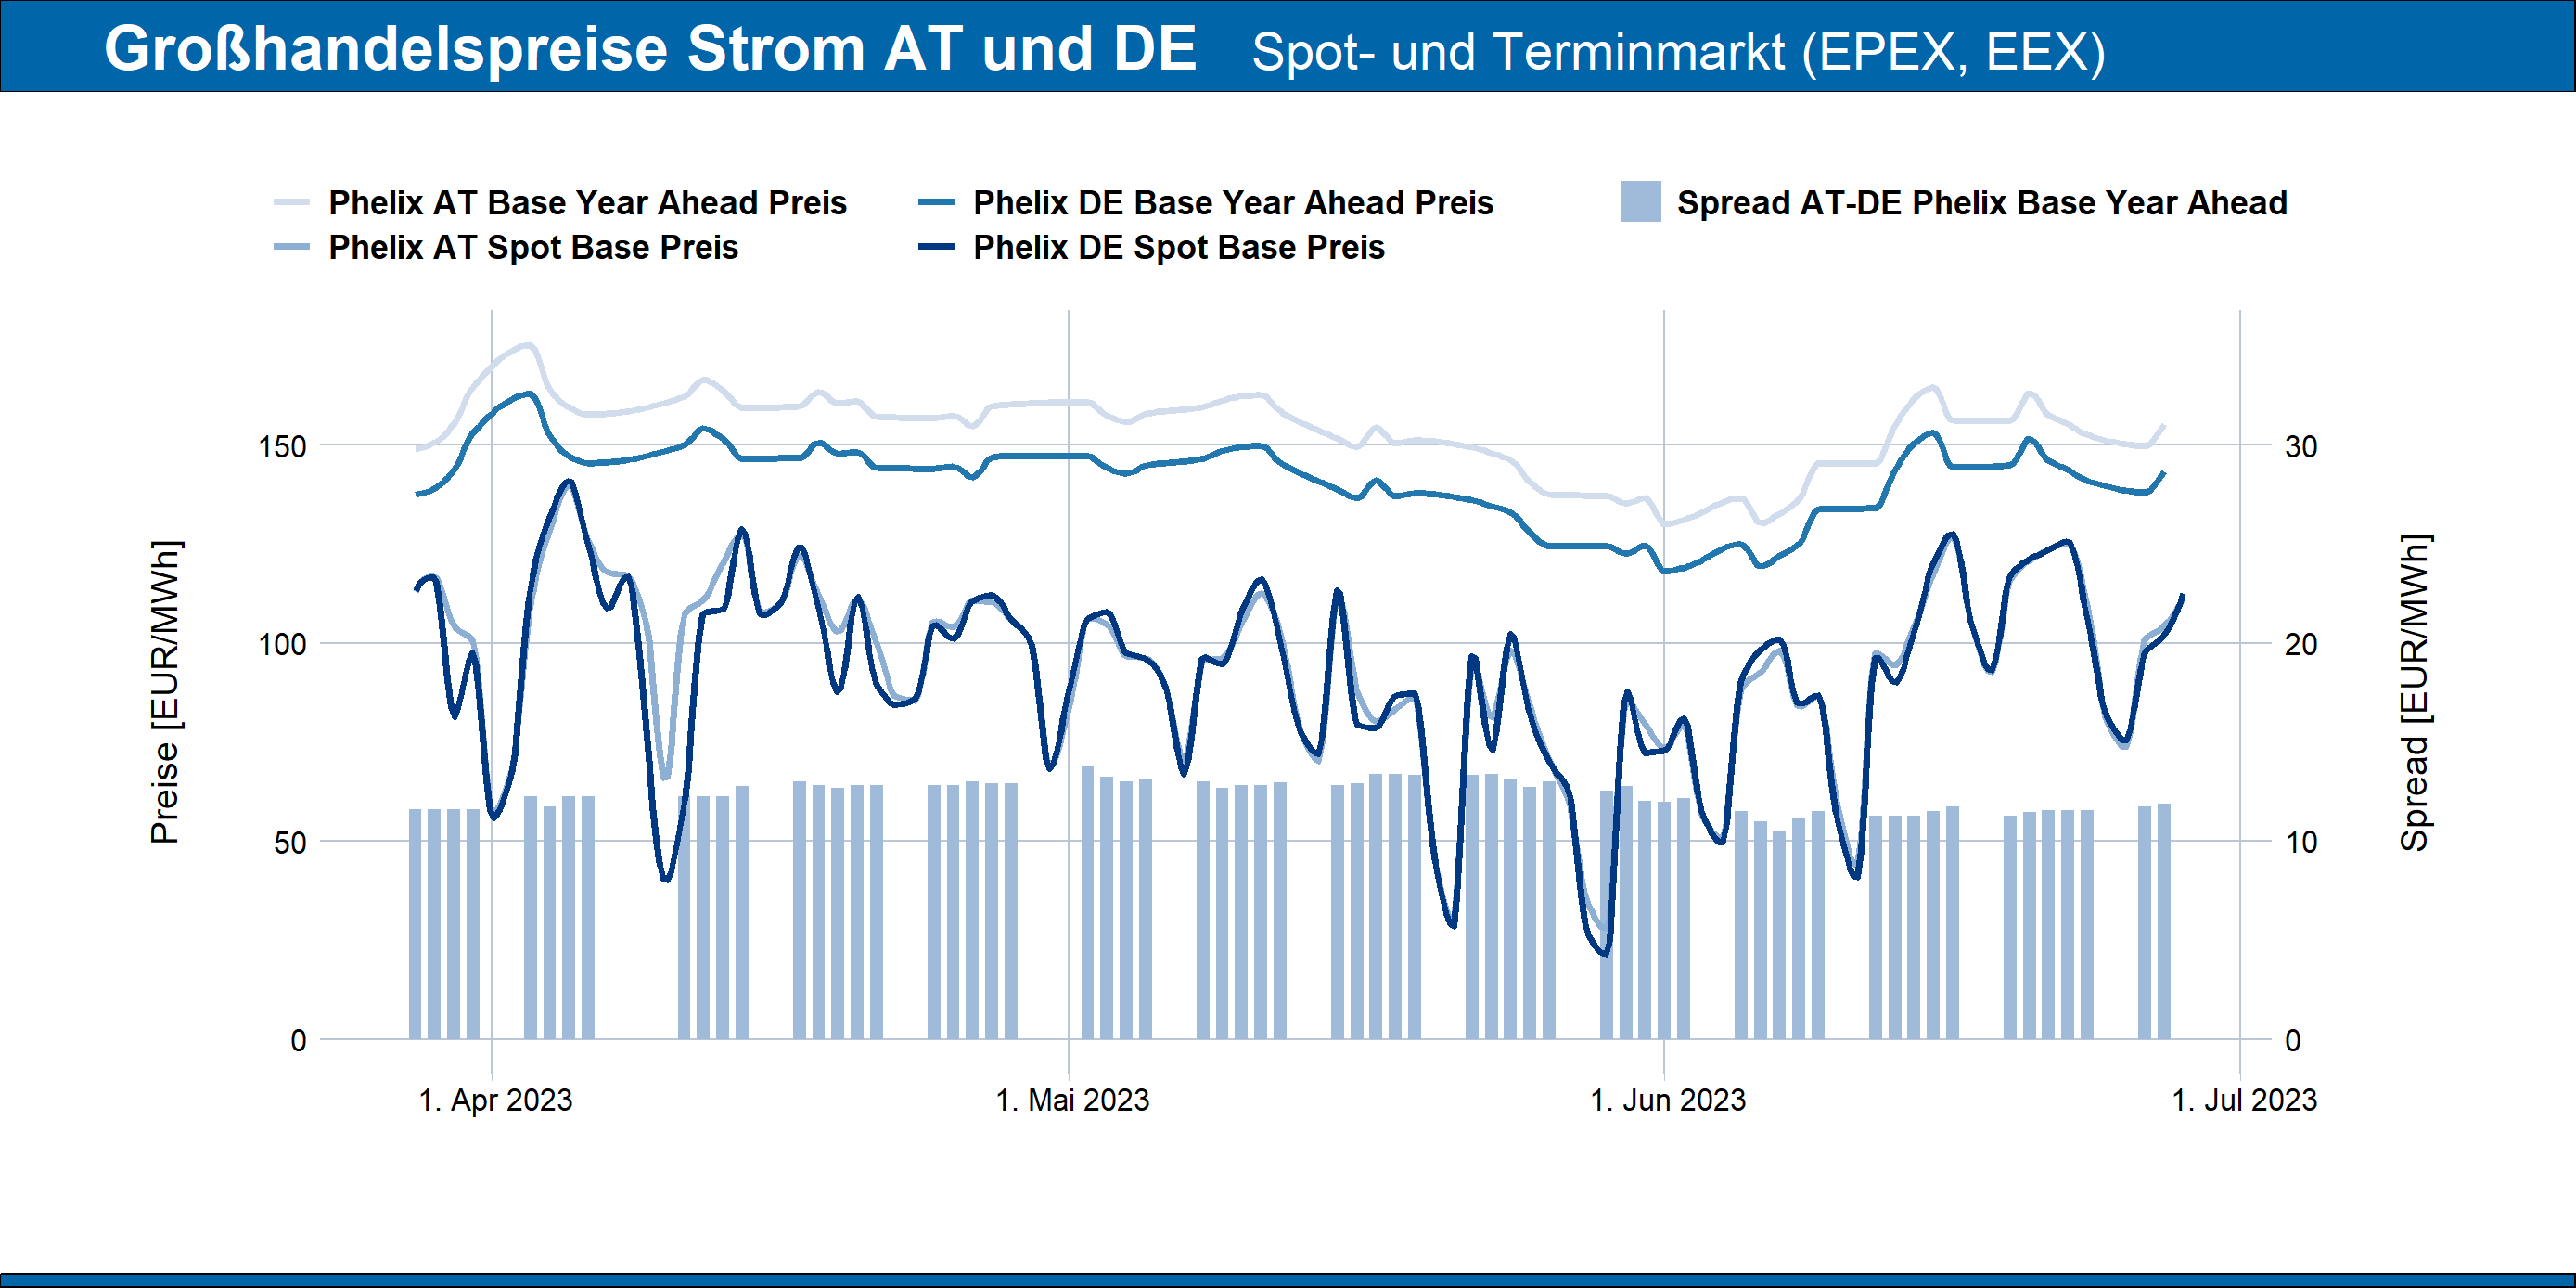 Grosshandelspreise Strom in EUR/MWh